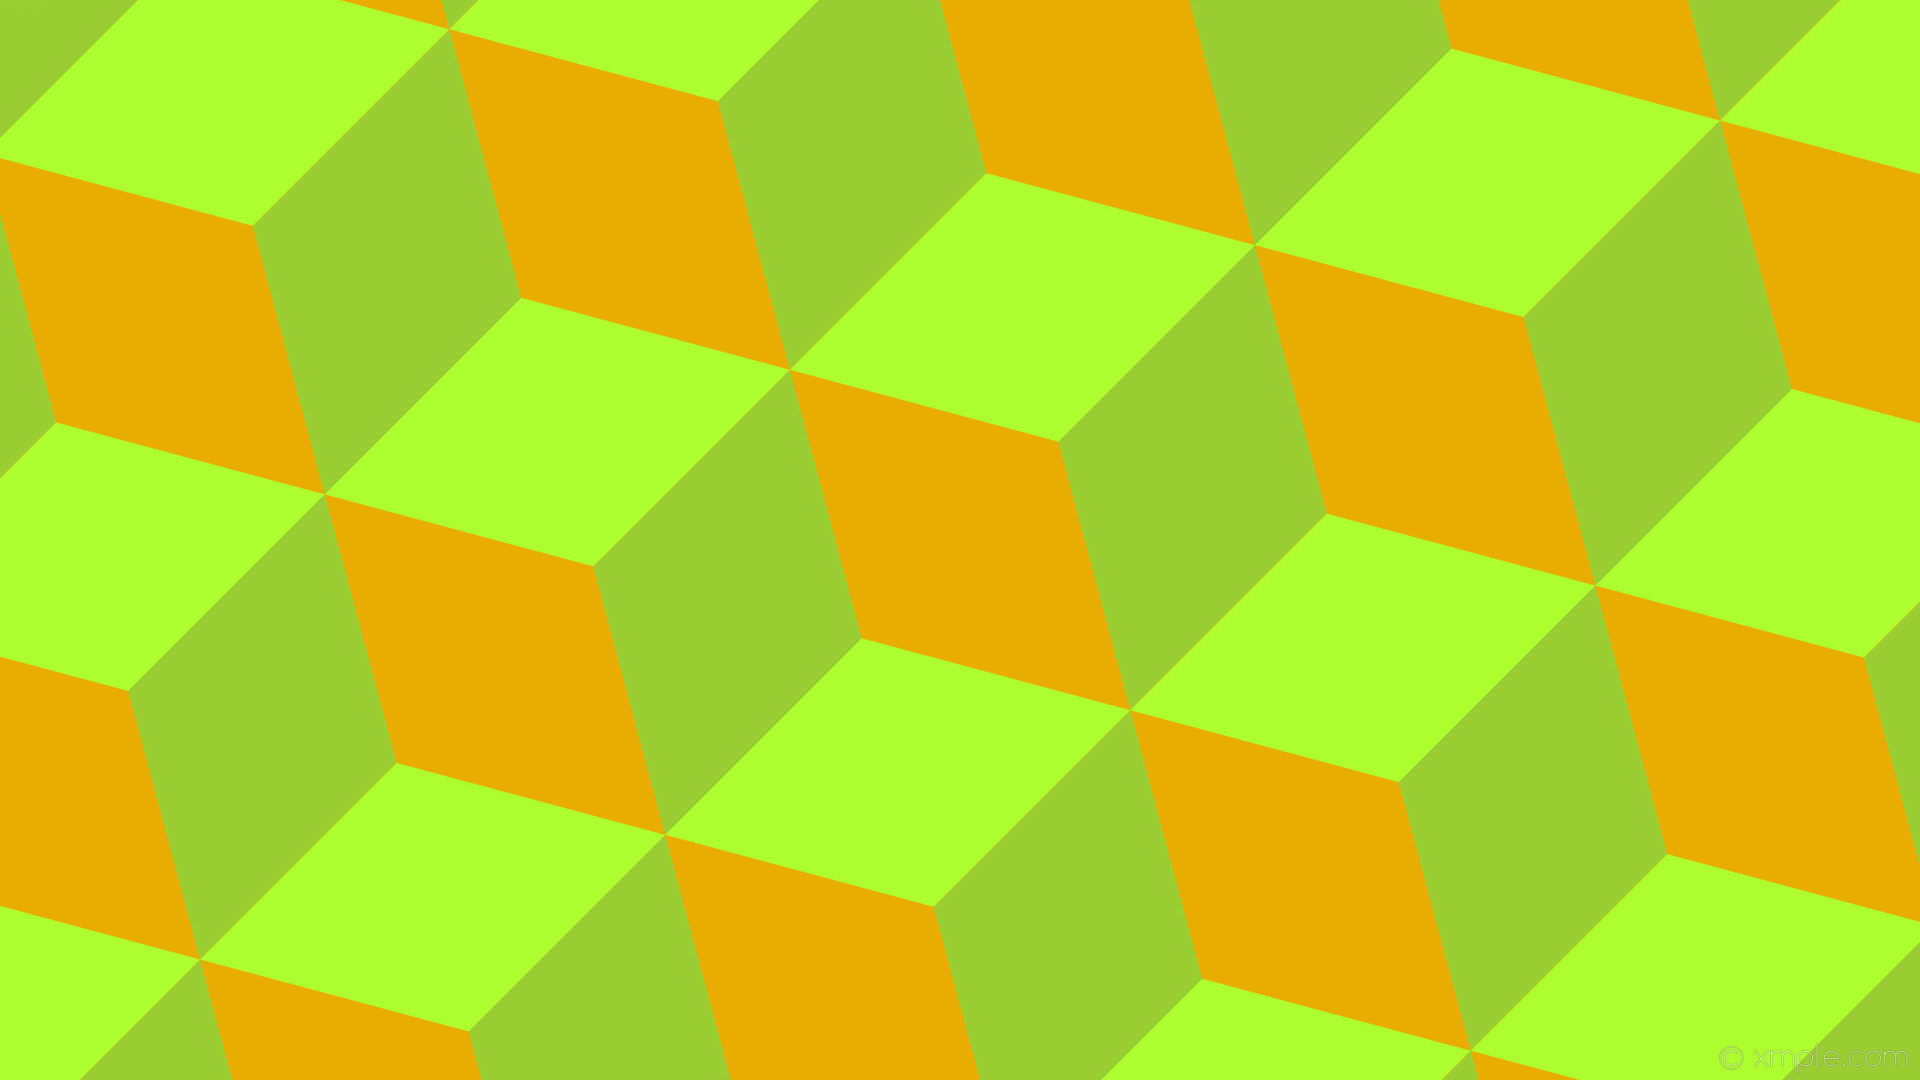 1920x1080 wallpaper green 3d cubes orange yellow green green yellow #e9ac01 #9acd32  #adff2f 135